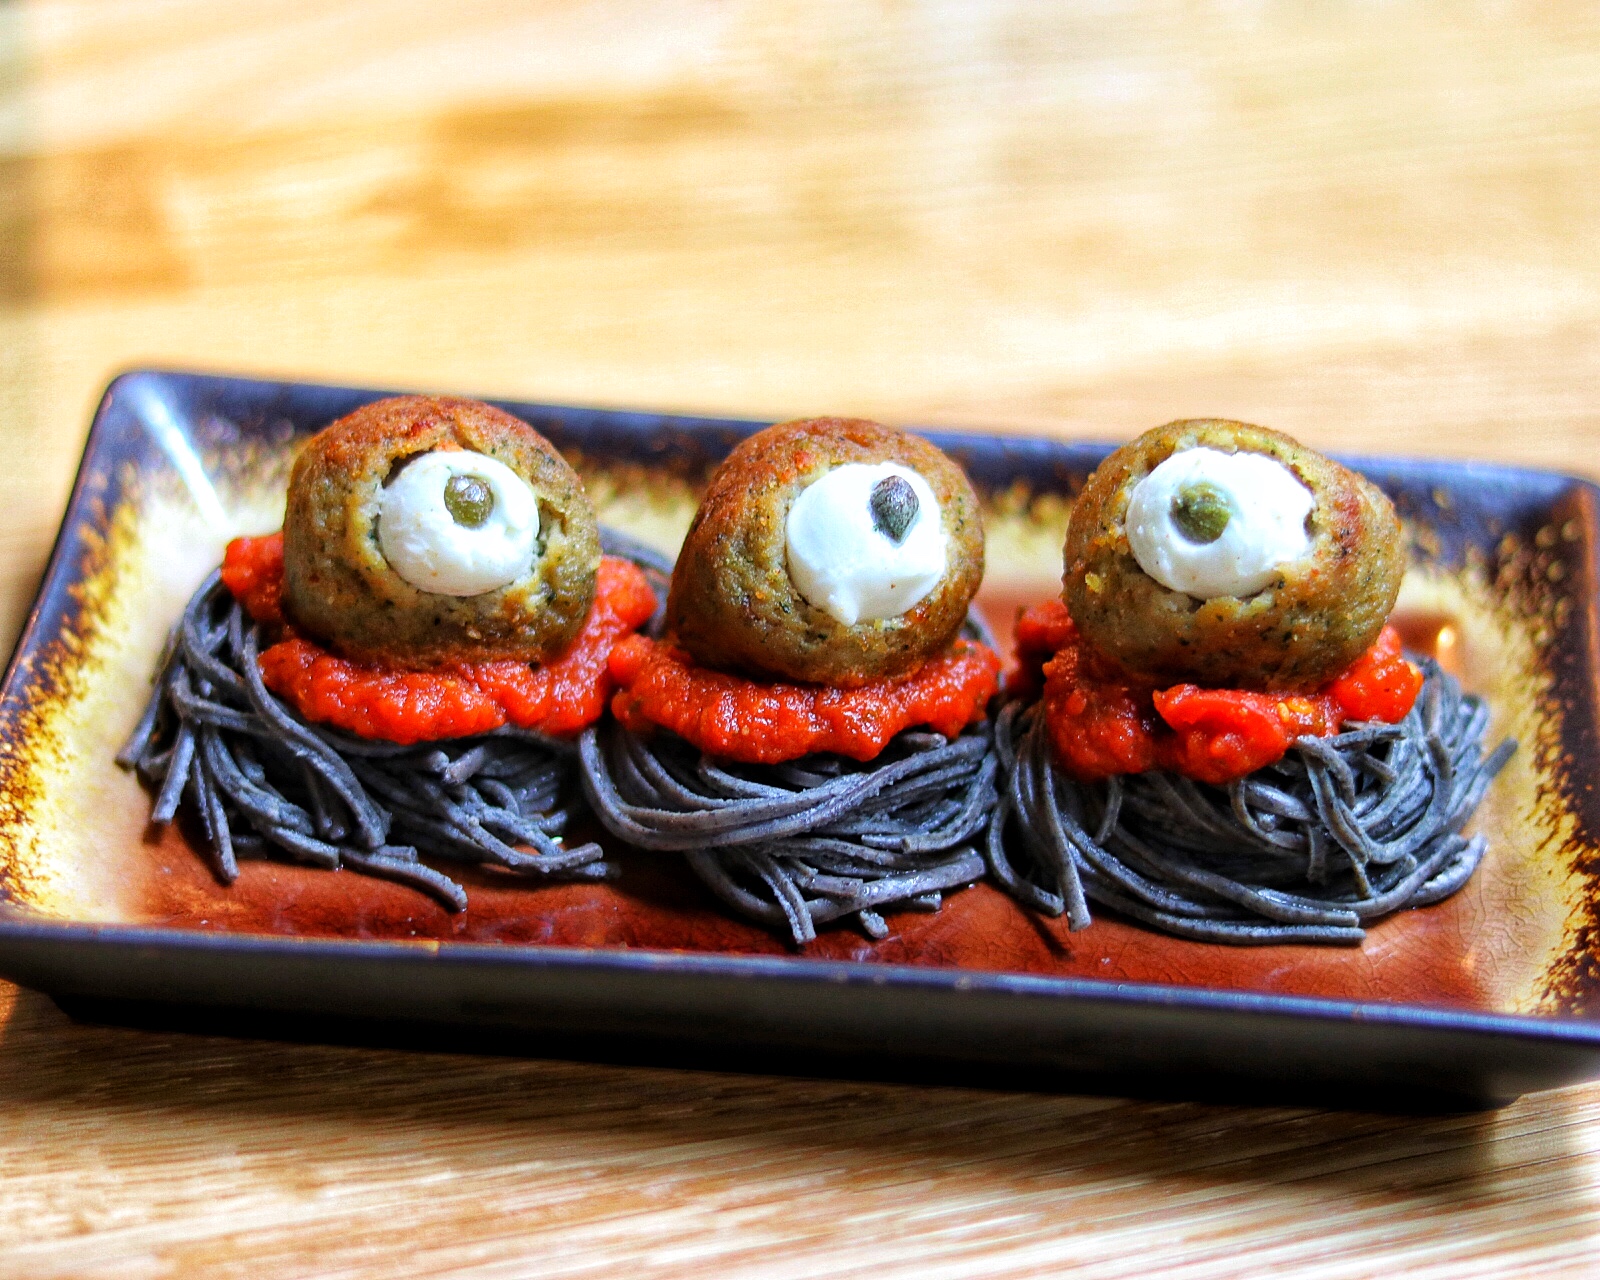 Spooky Spaghetti with Eyeball Meatballs (Halloween food ideas)